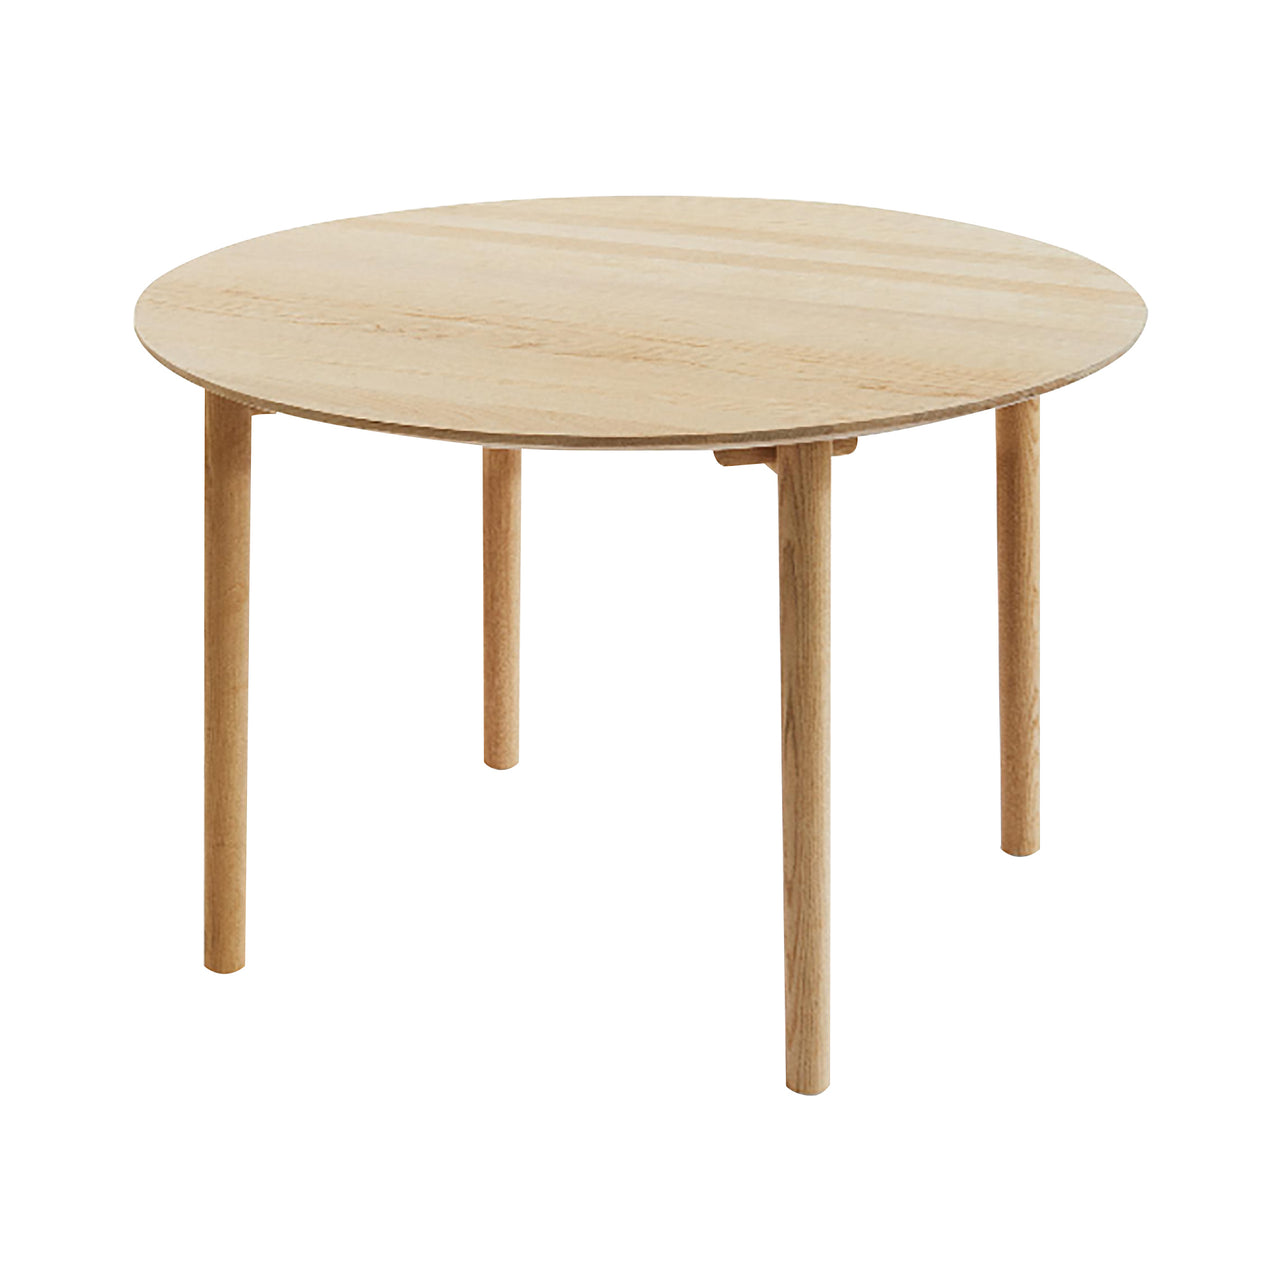 Hven Round Table: Oak